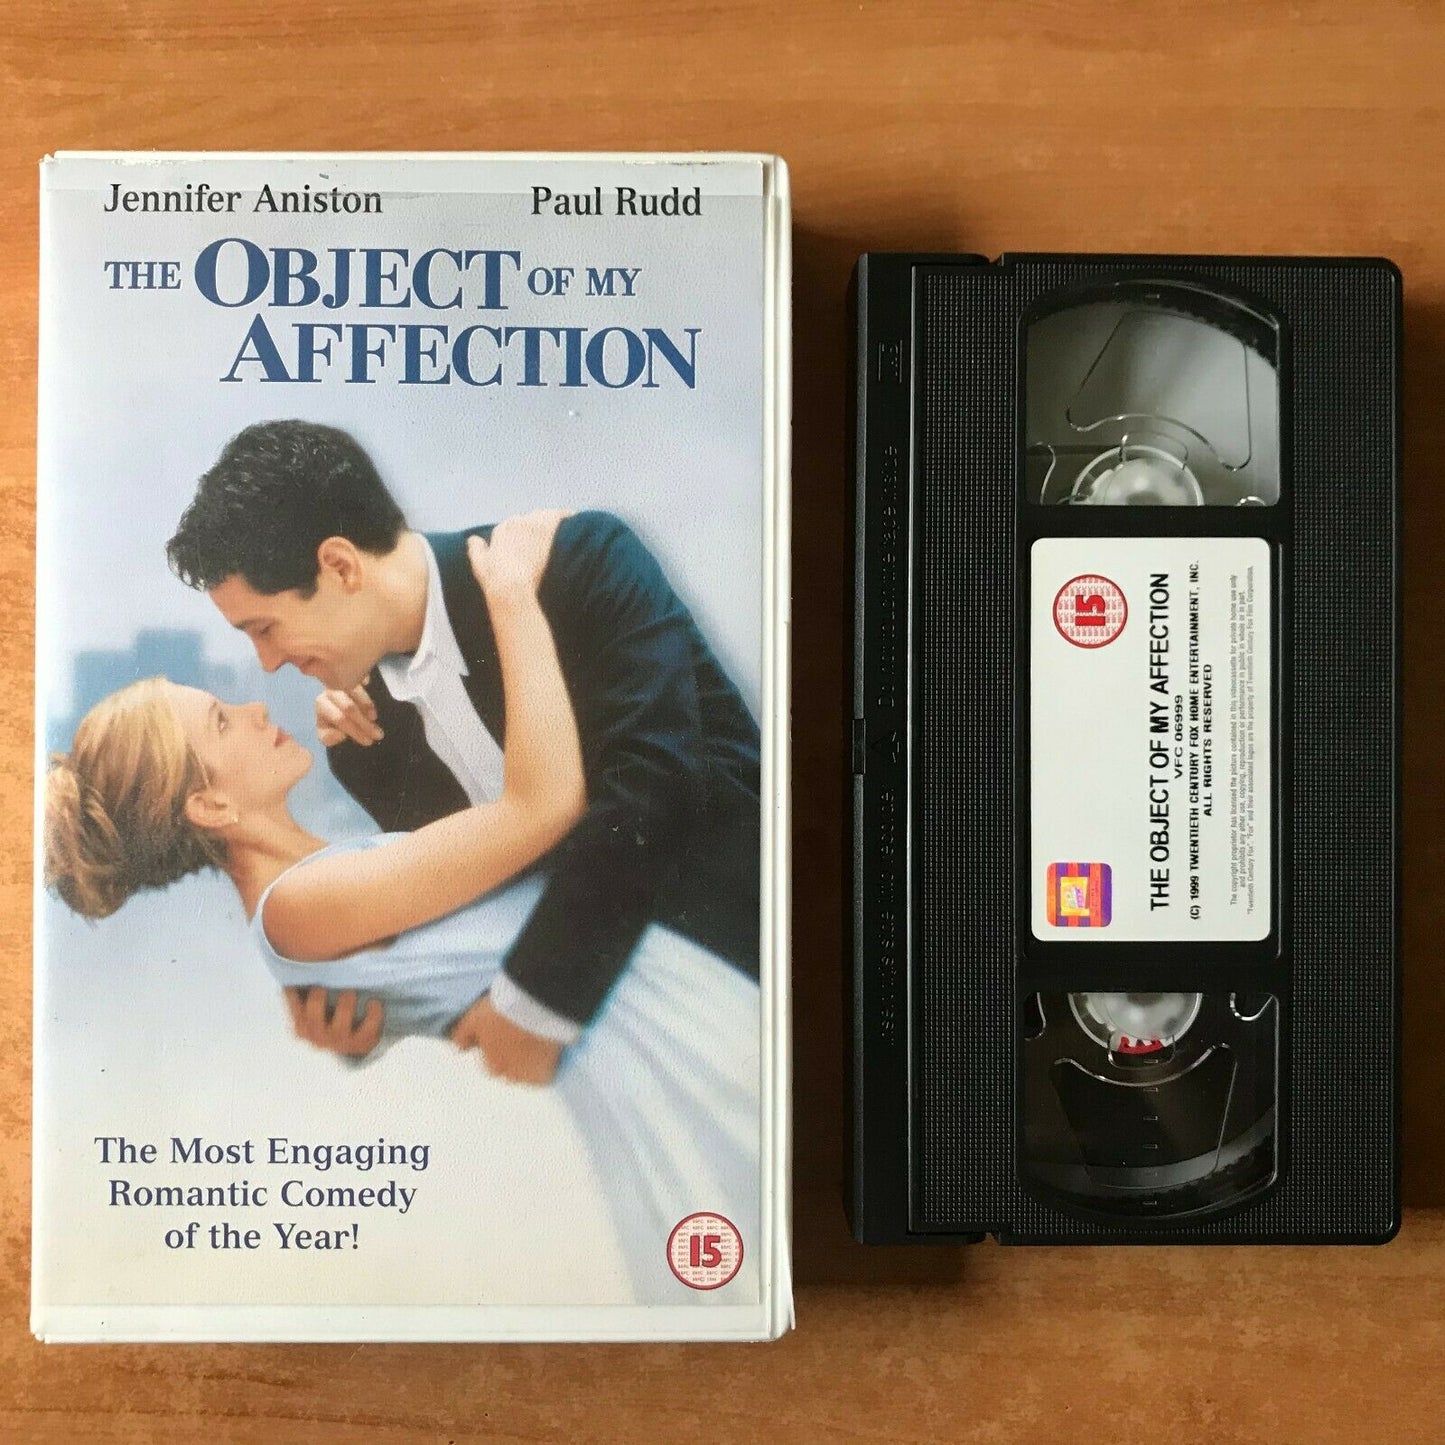 The Object Of My Affection: Romance [Large Box] Rental - Jennifer Aniston - VHS-